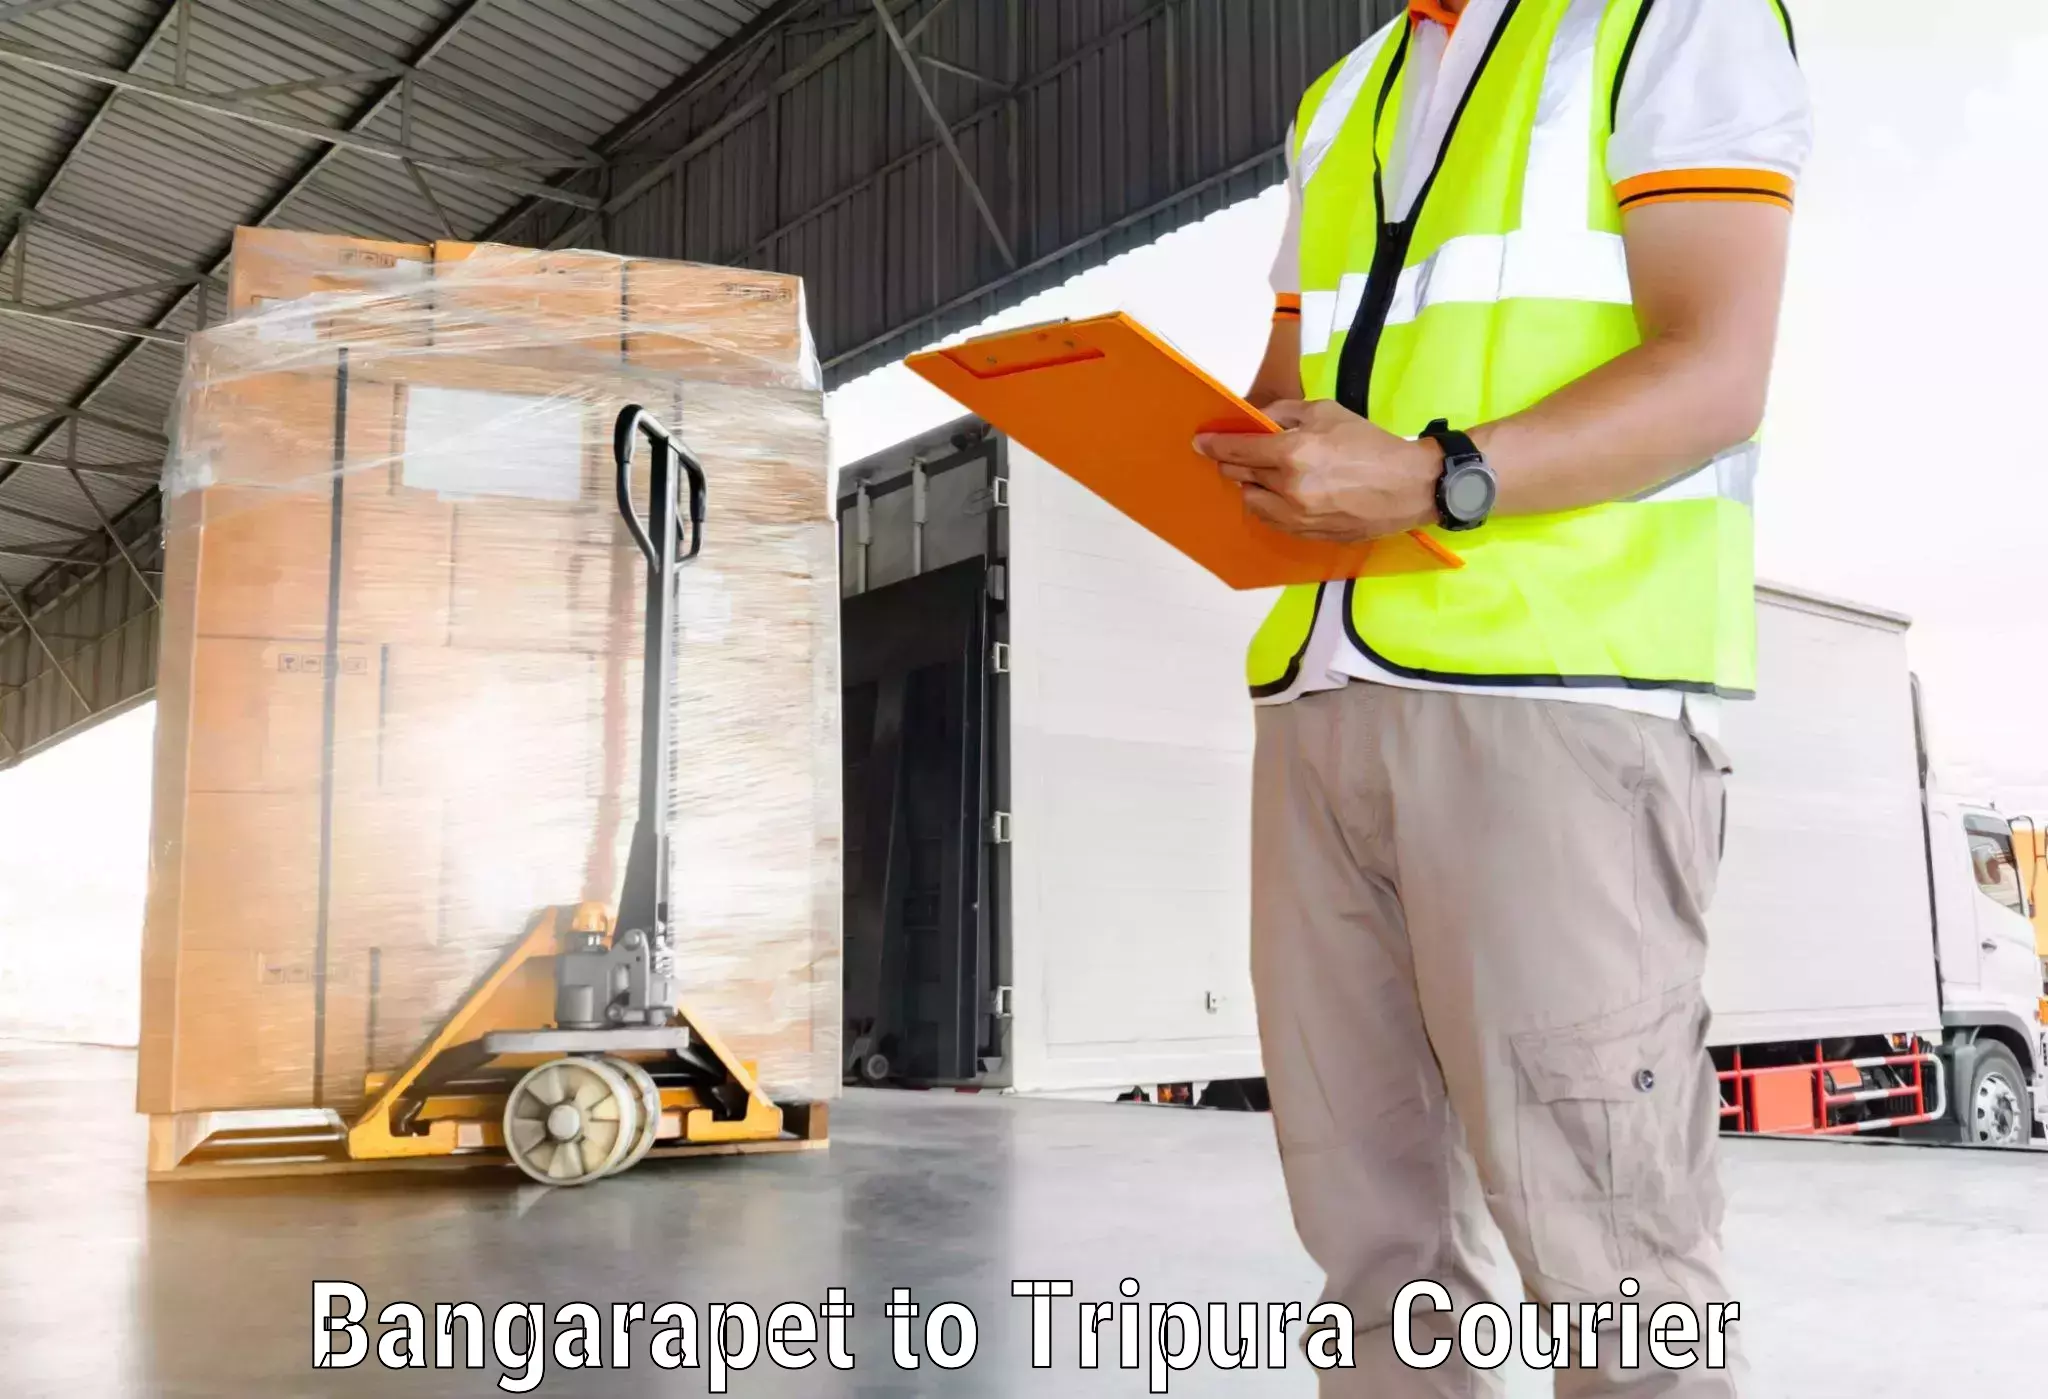 Courier service partnerships Bangarapet to Tripura